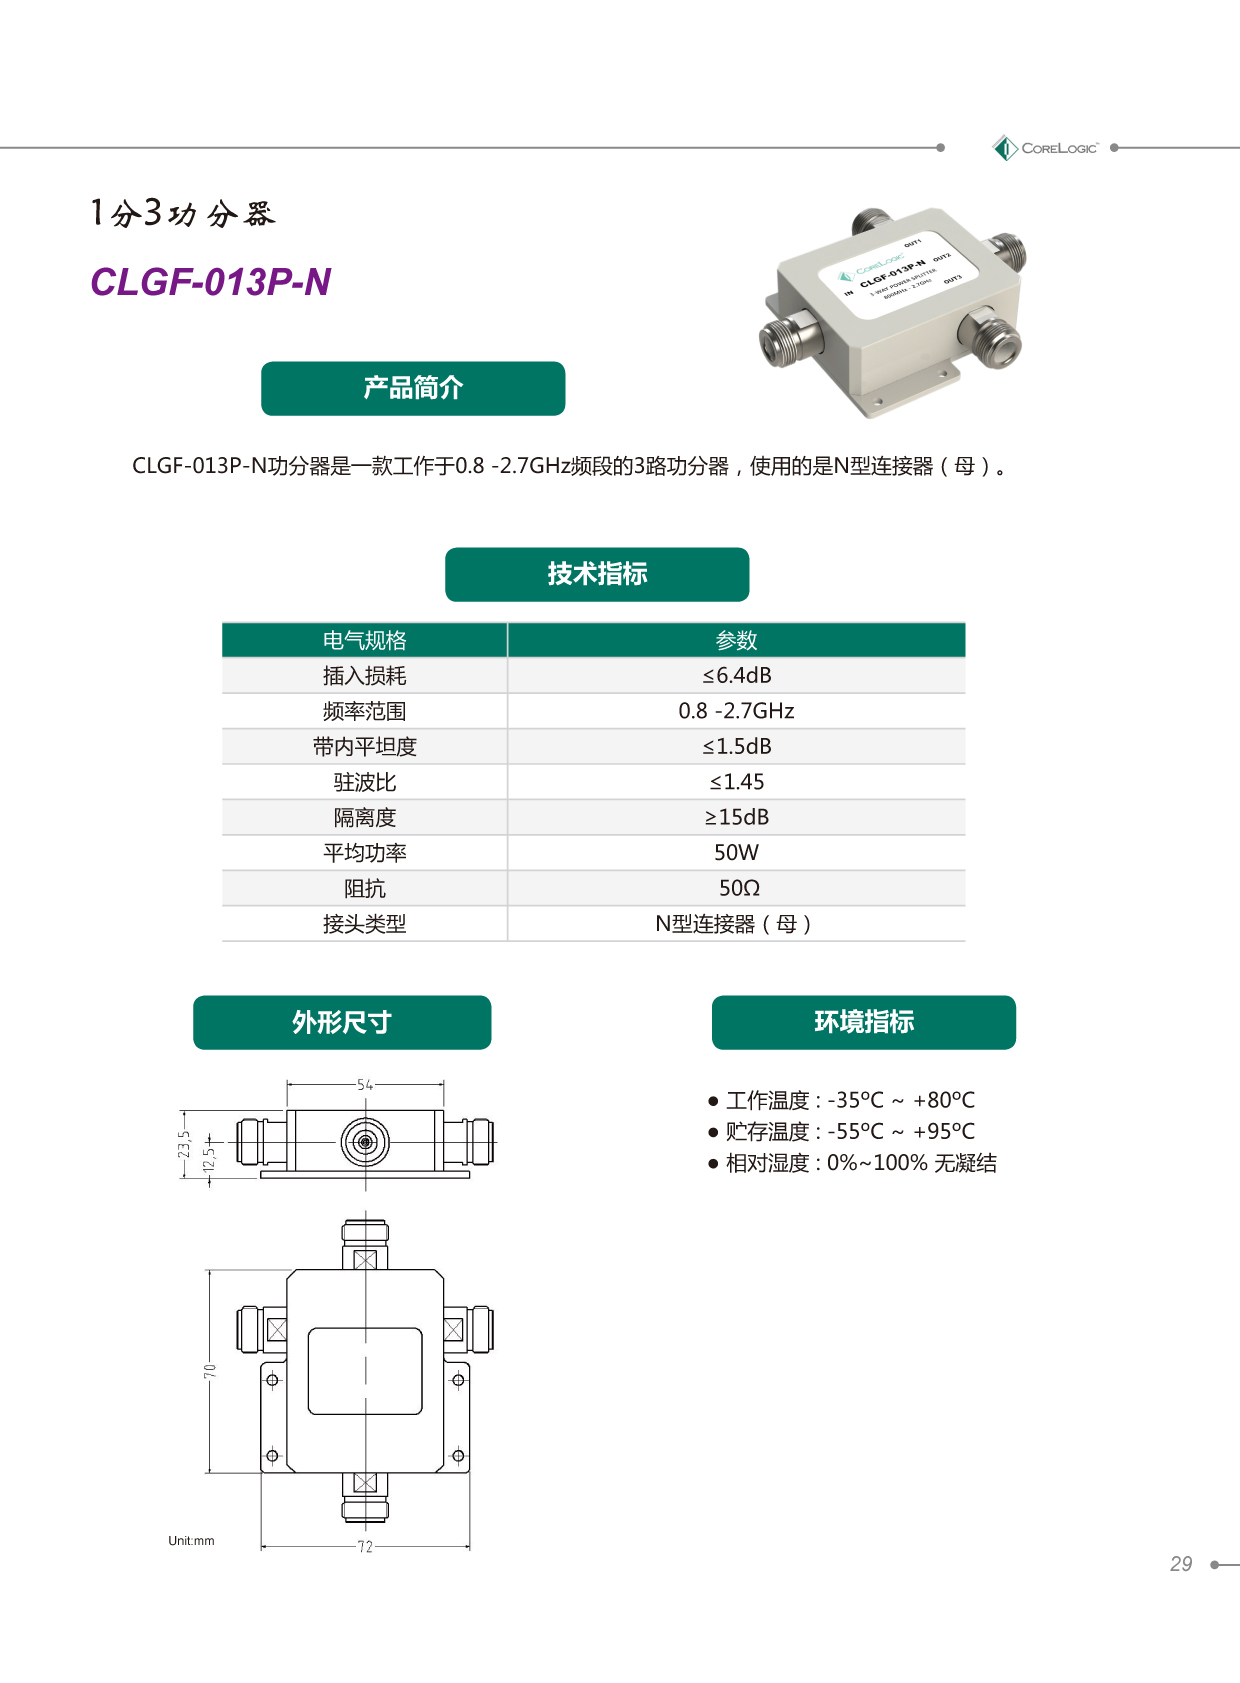 clgf-013p-n产品详情